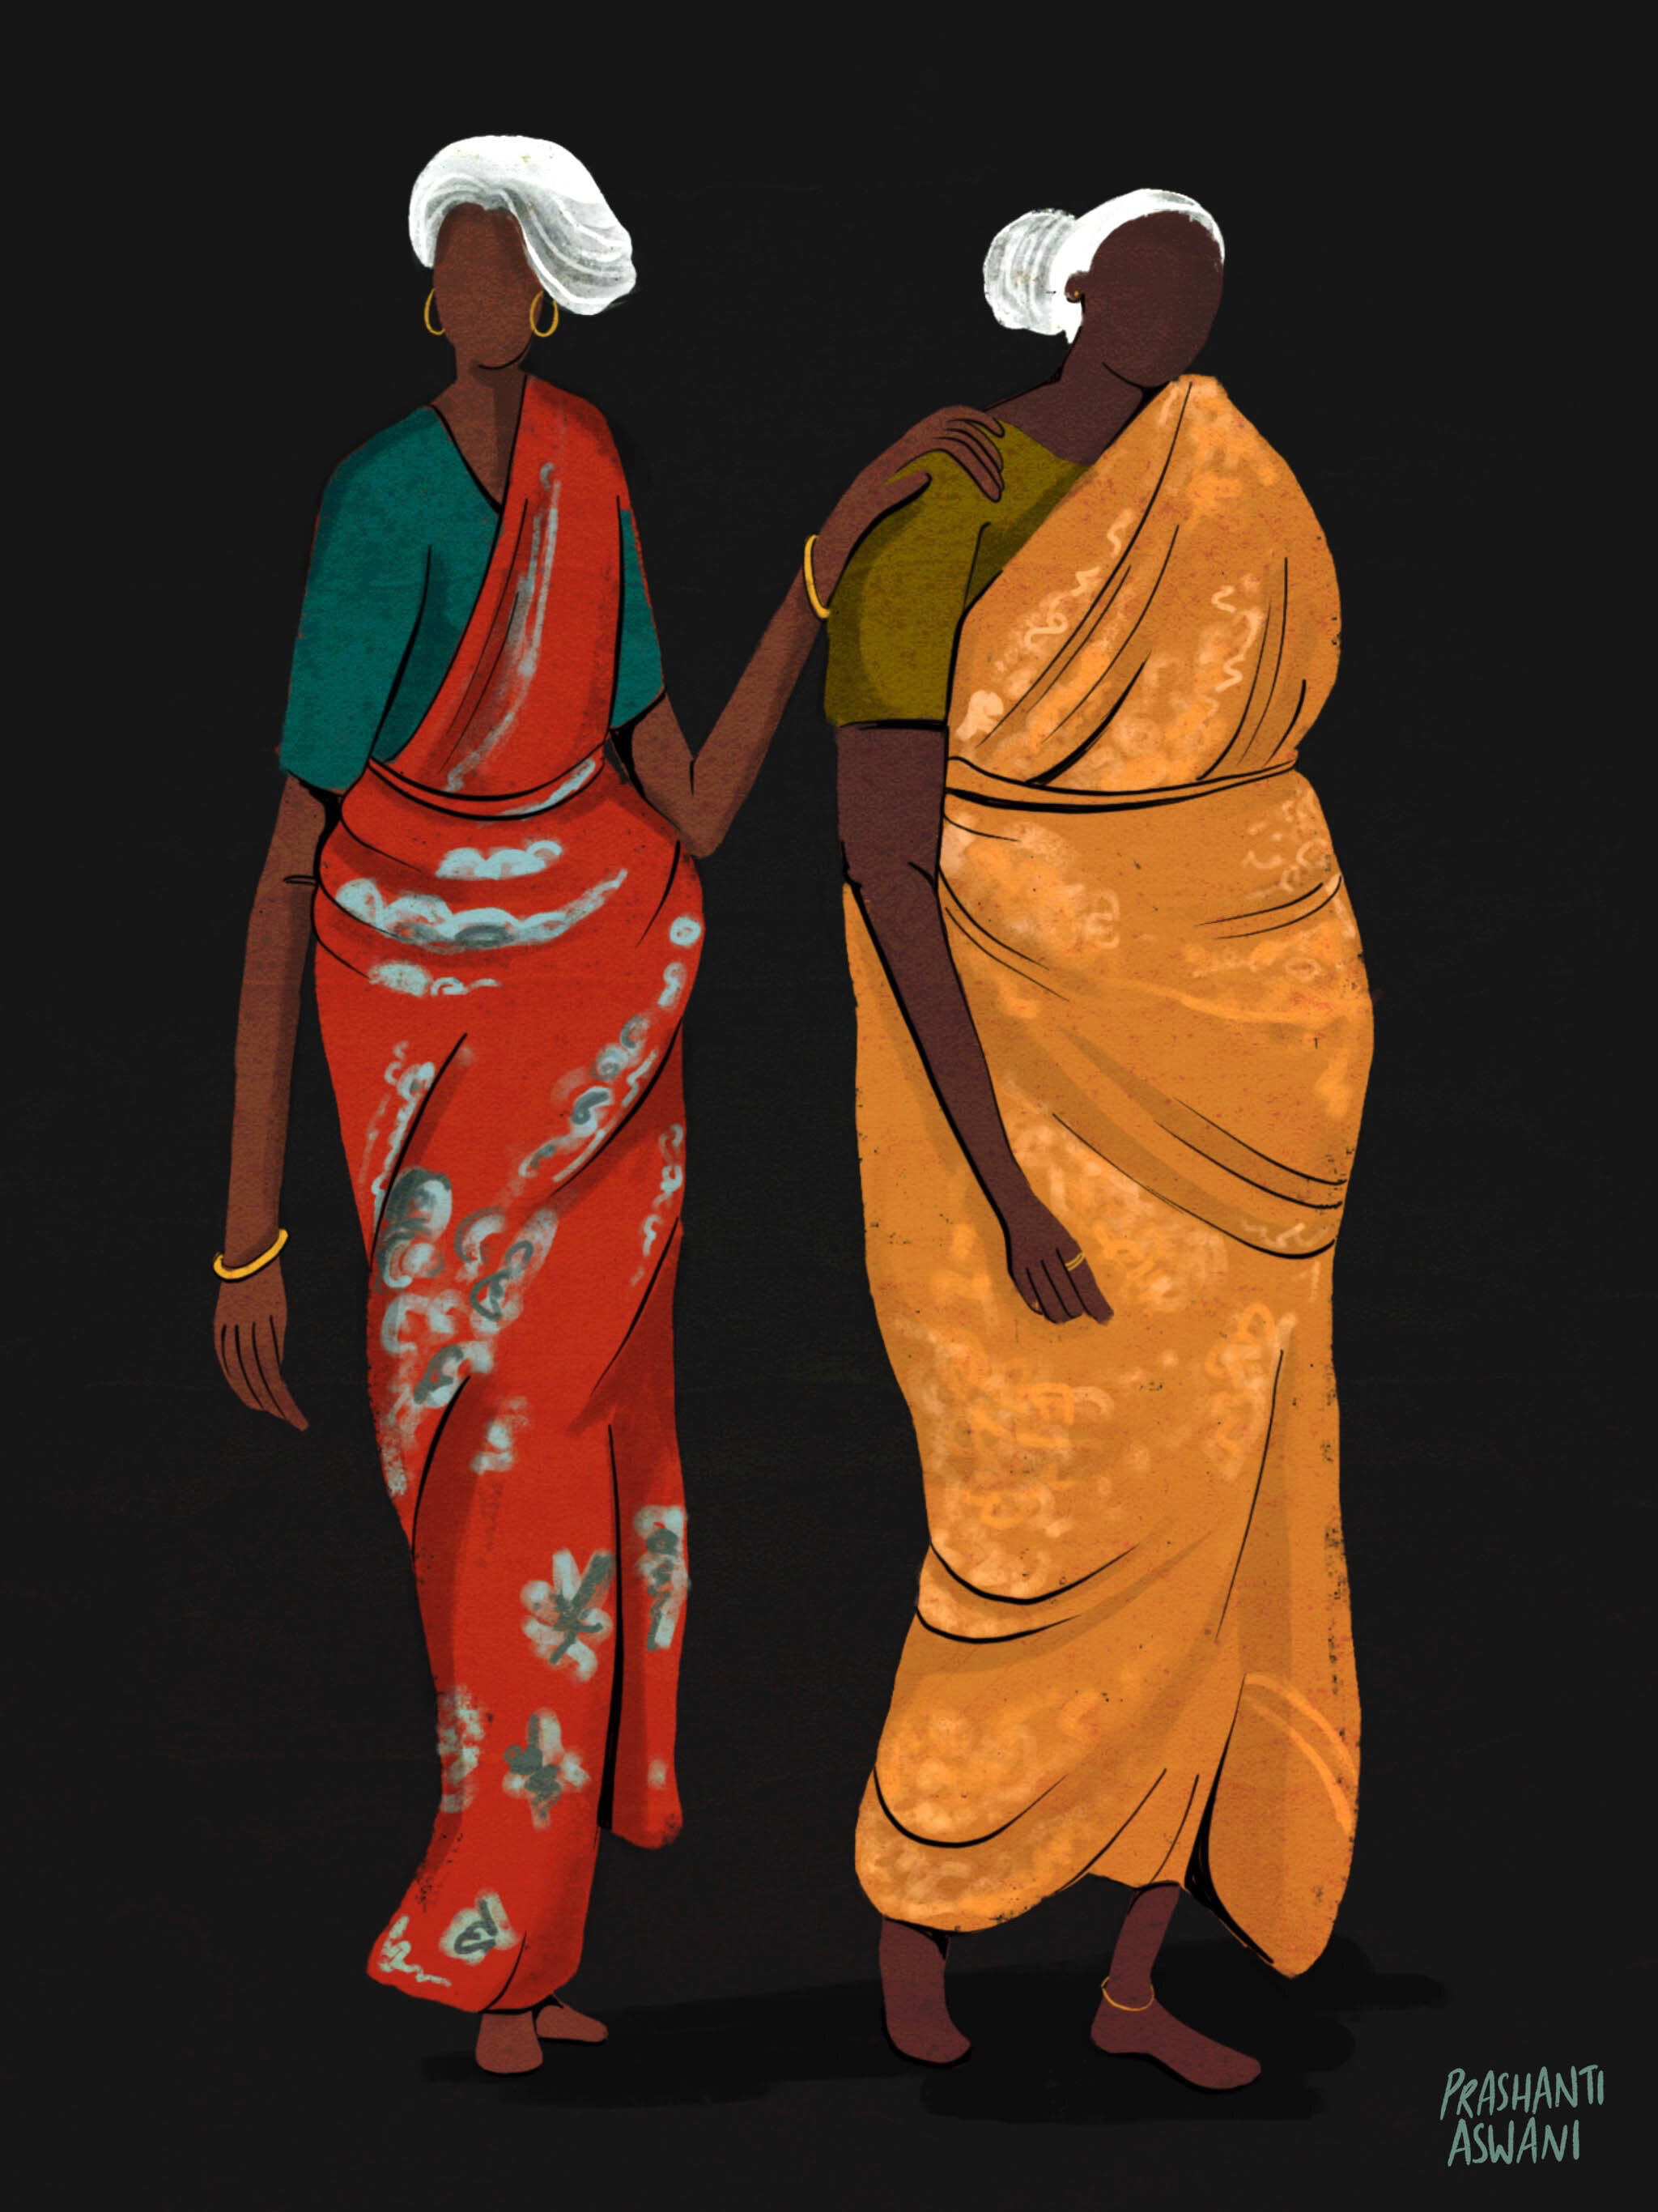 “Akka Thangai” by Prashanti AswaniMedium: Digital Illustration - 